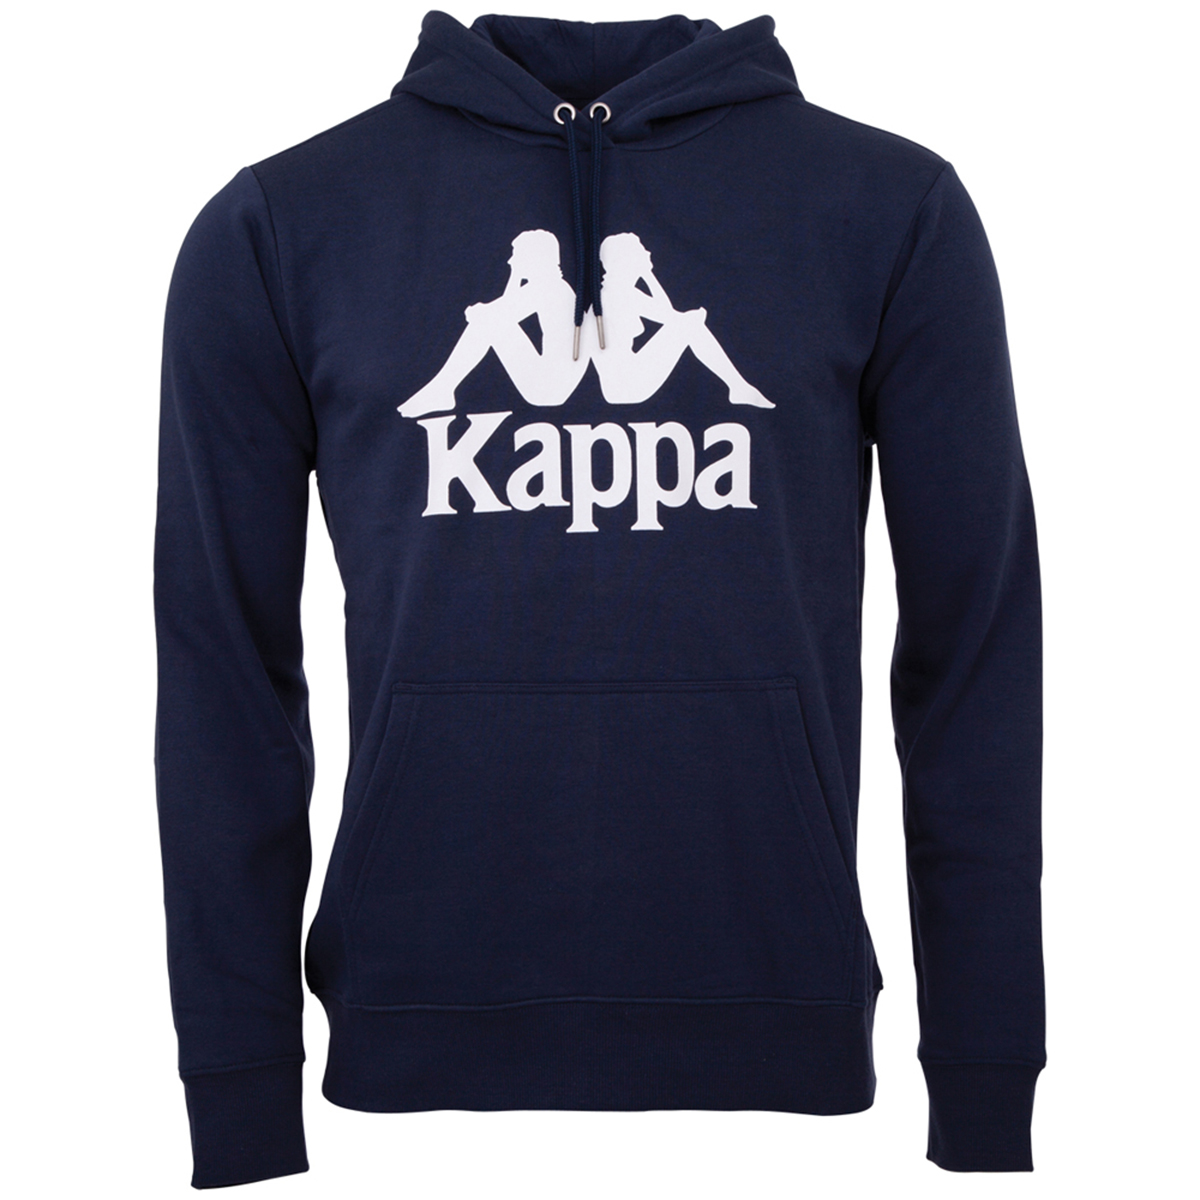 Kappa Unisex Hooded Sweatshirt navy 705322 821